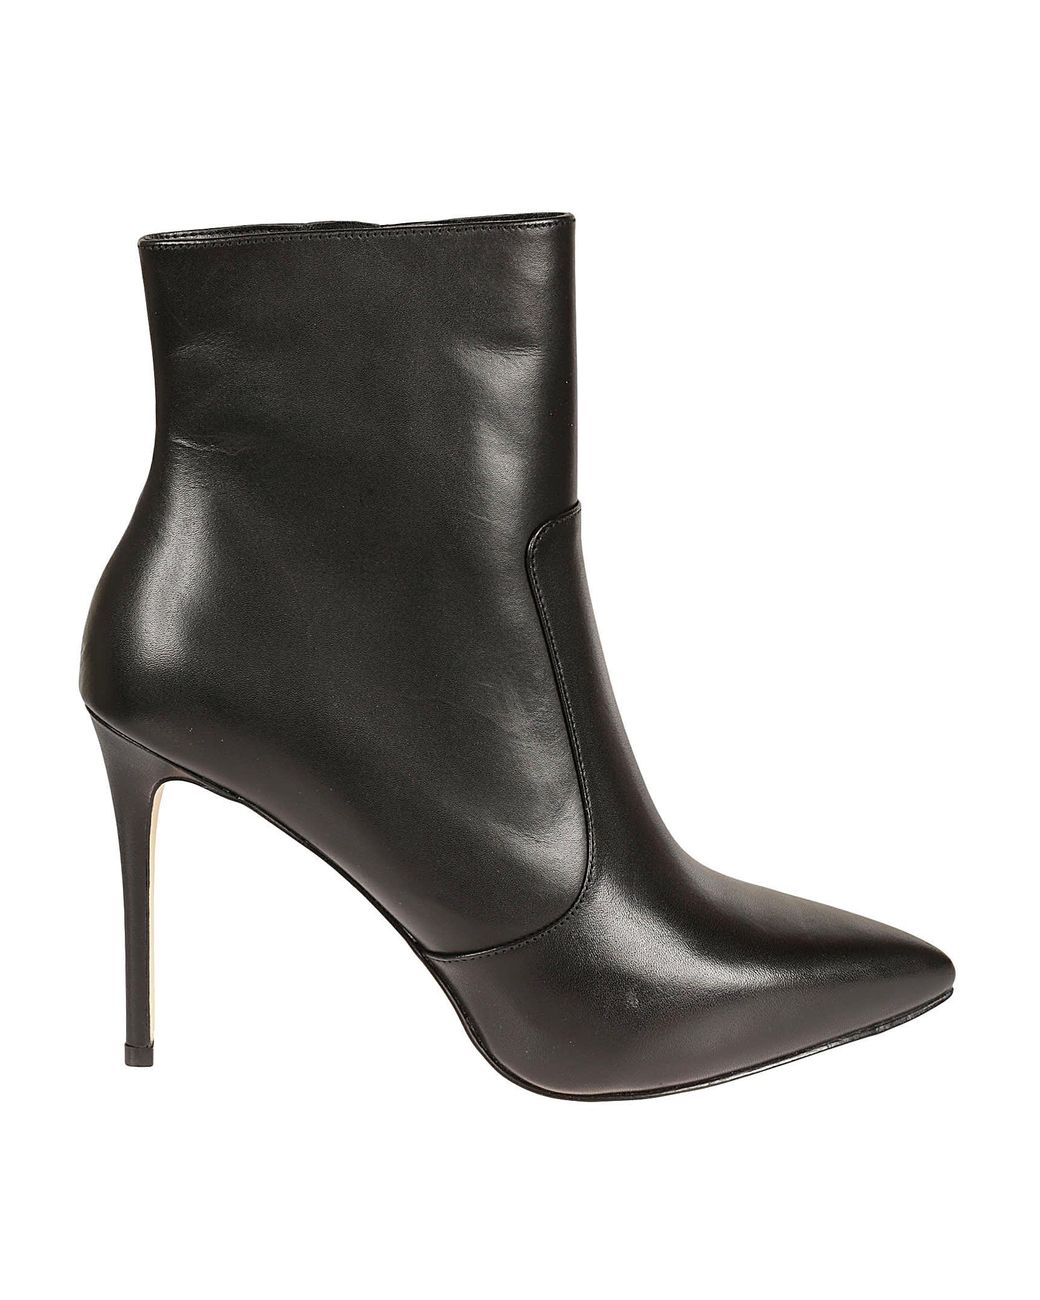 Michael Kors Rue Stiletto Boots in Black | Lyst